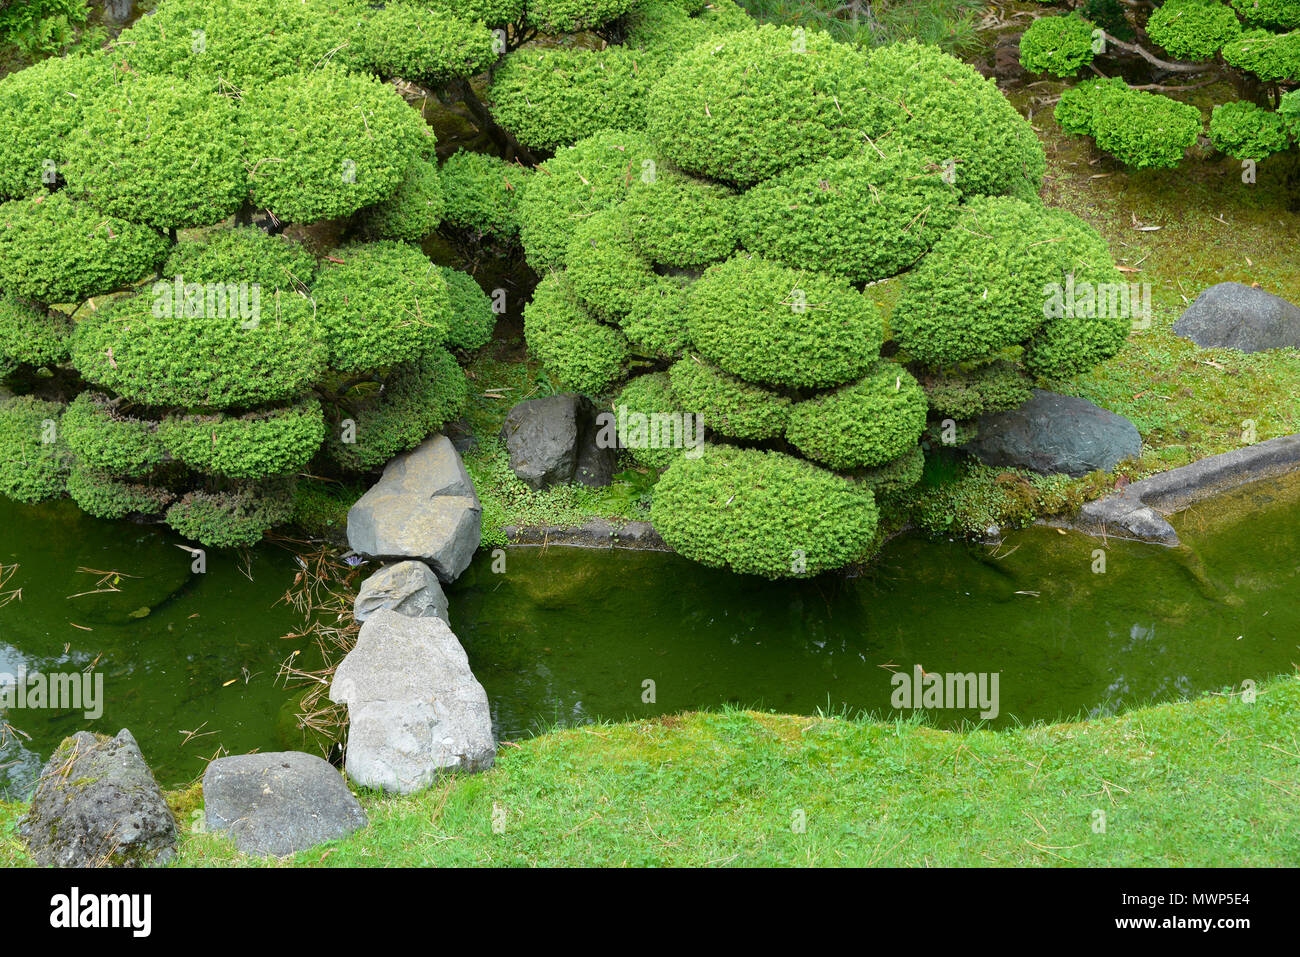 O-karikomi (type of topiary style) sculpted bushes with miniature stone foot bridge, Golden Gate Park, Japanese Tea Garden, San Francisco, CA, USA Stock Photo